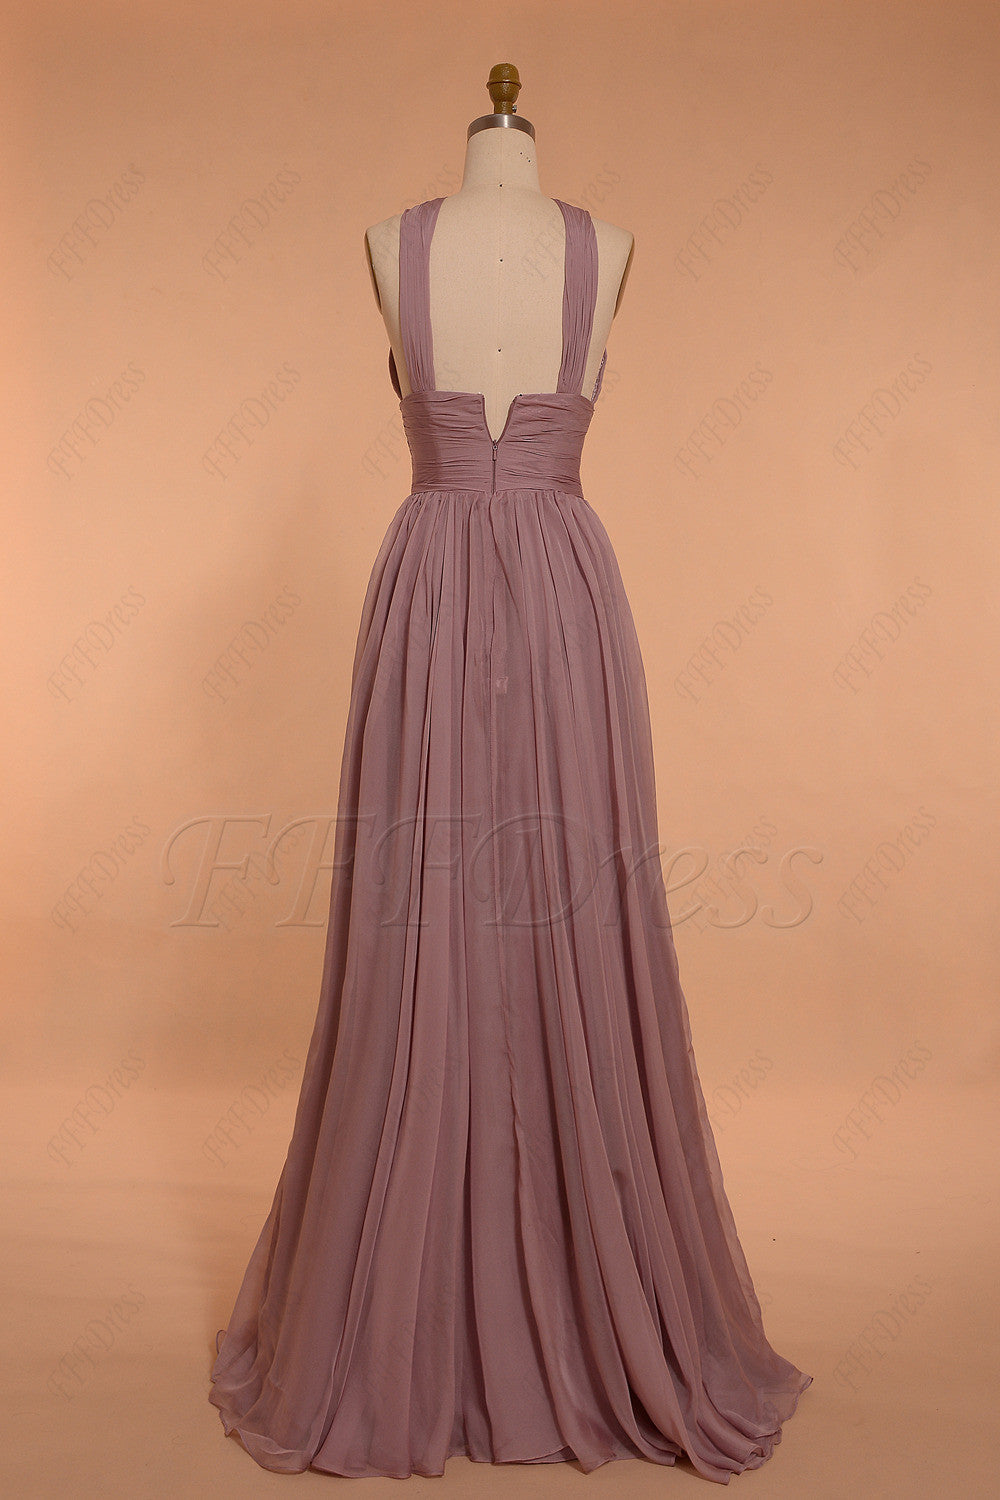 Halter wisteria purple bridesmaid dresses